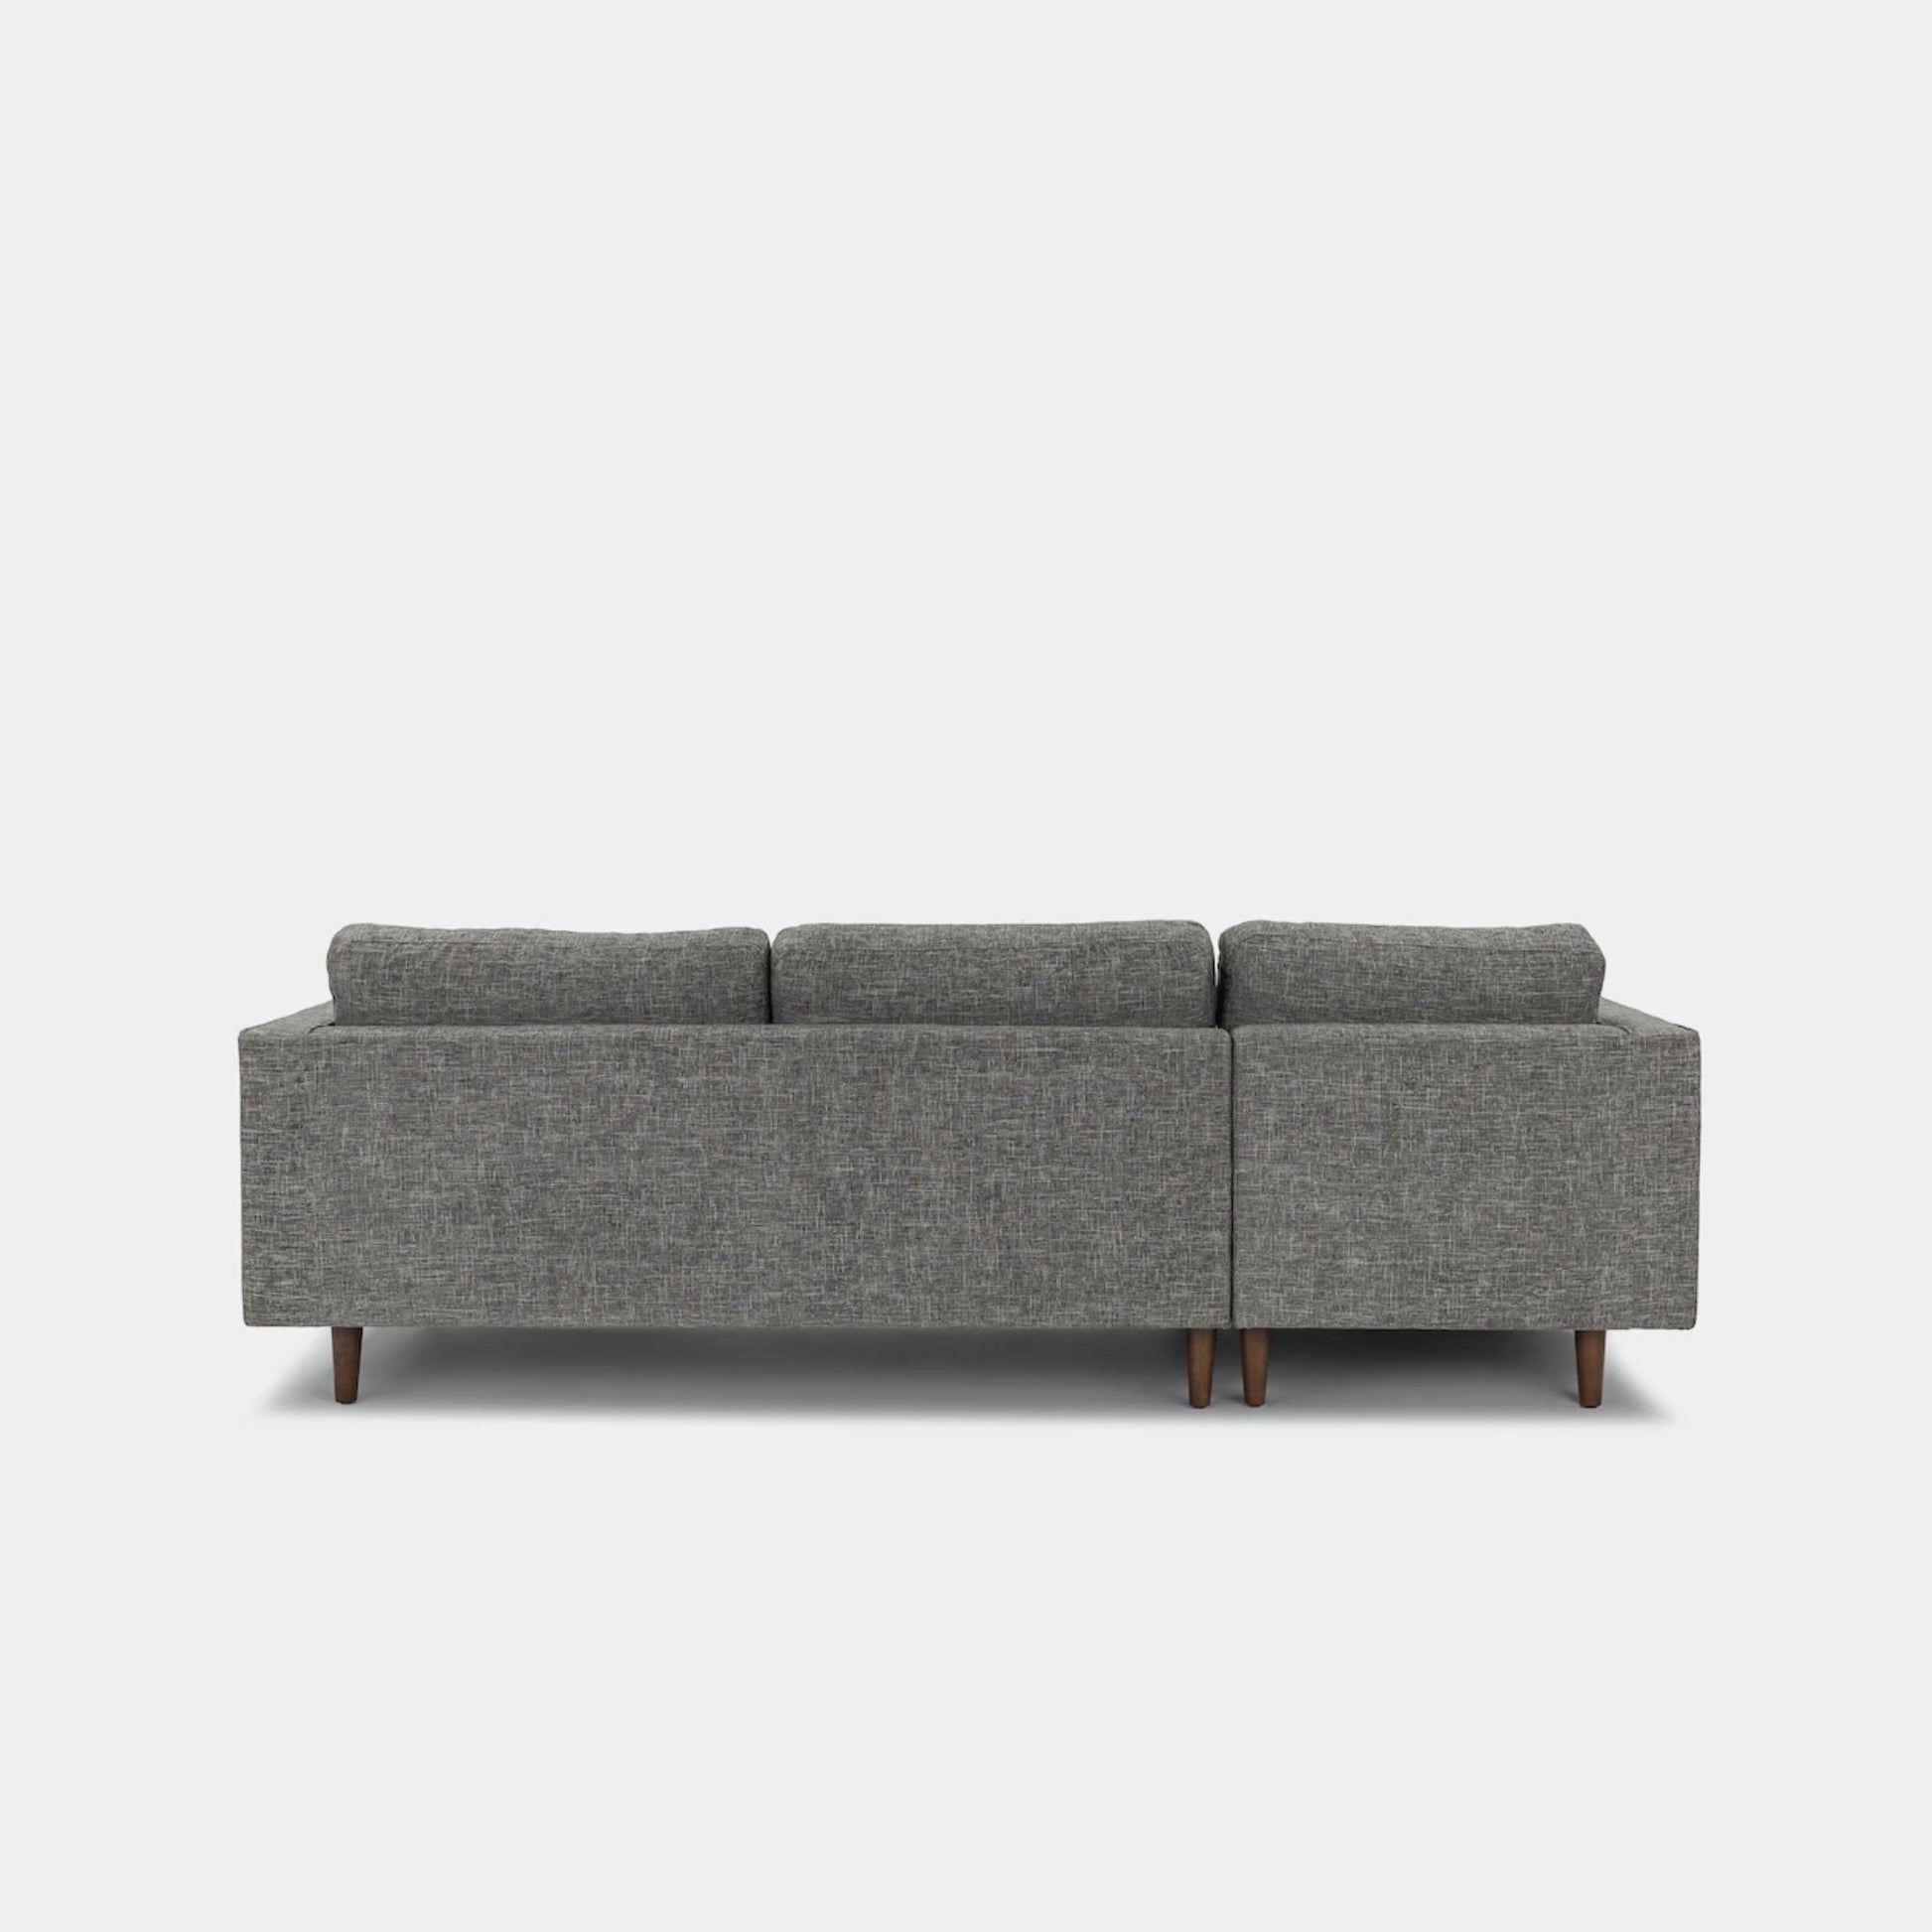 Castle fabric sectional sofa left grey